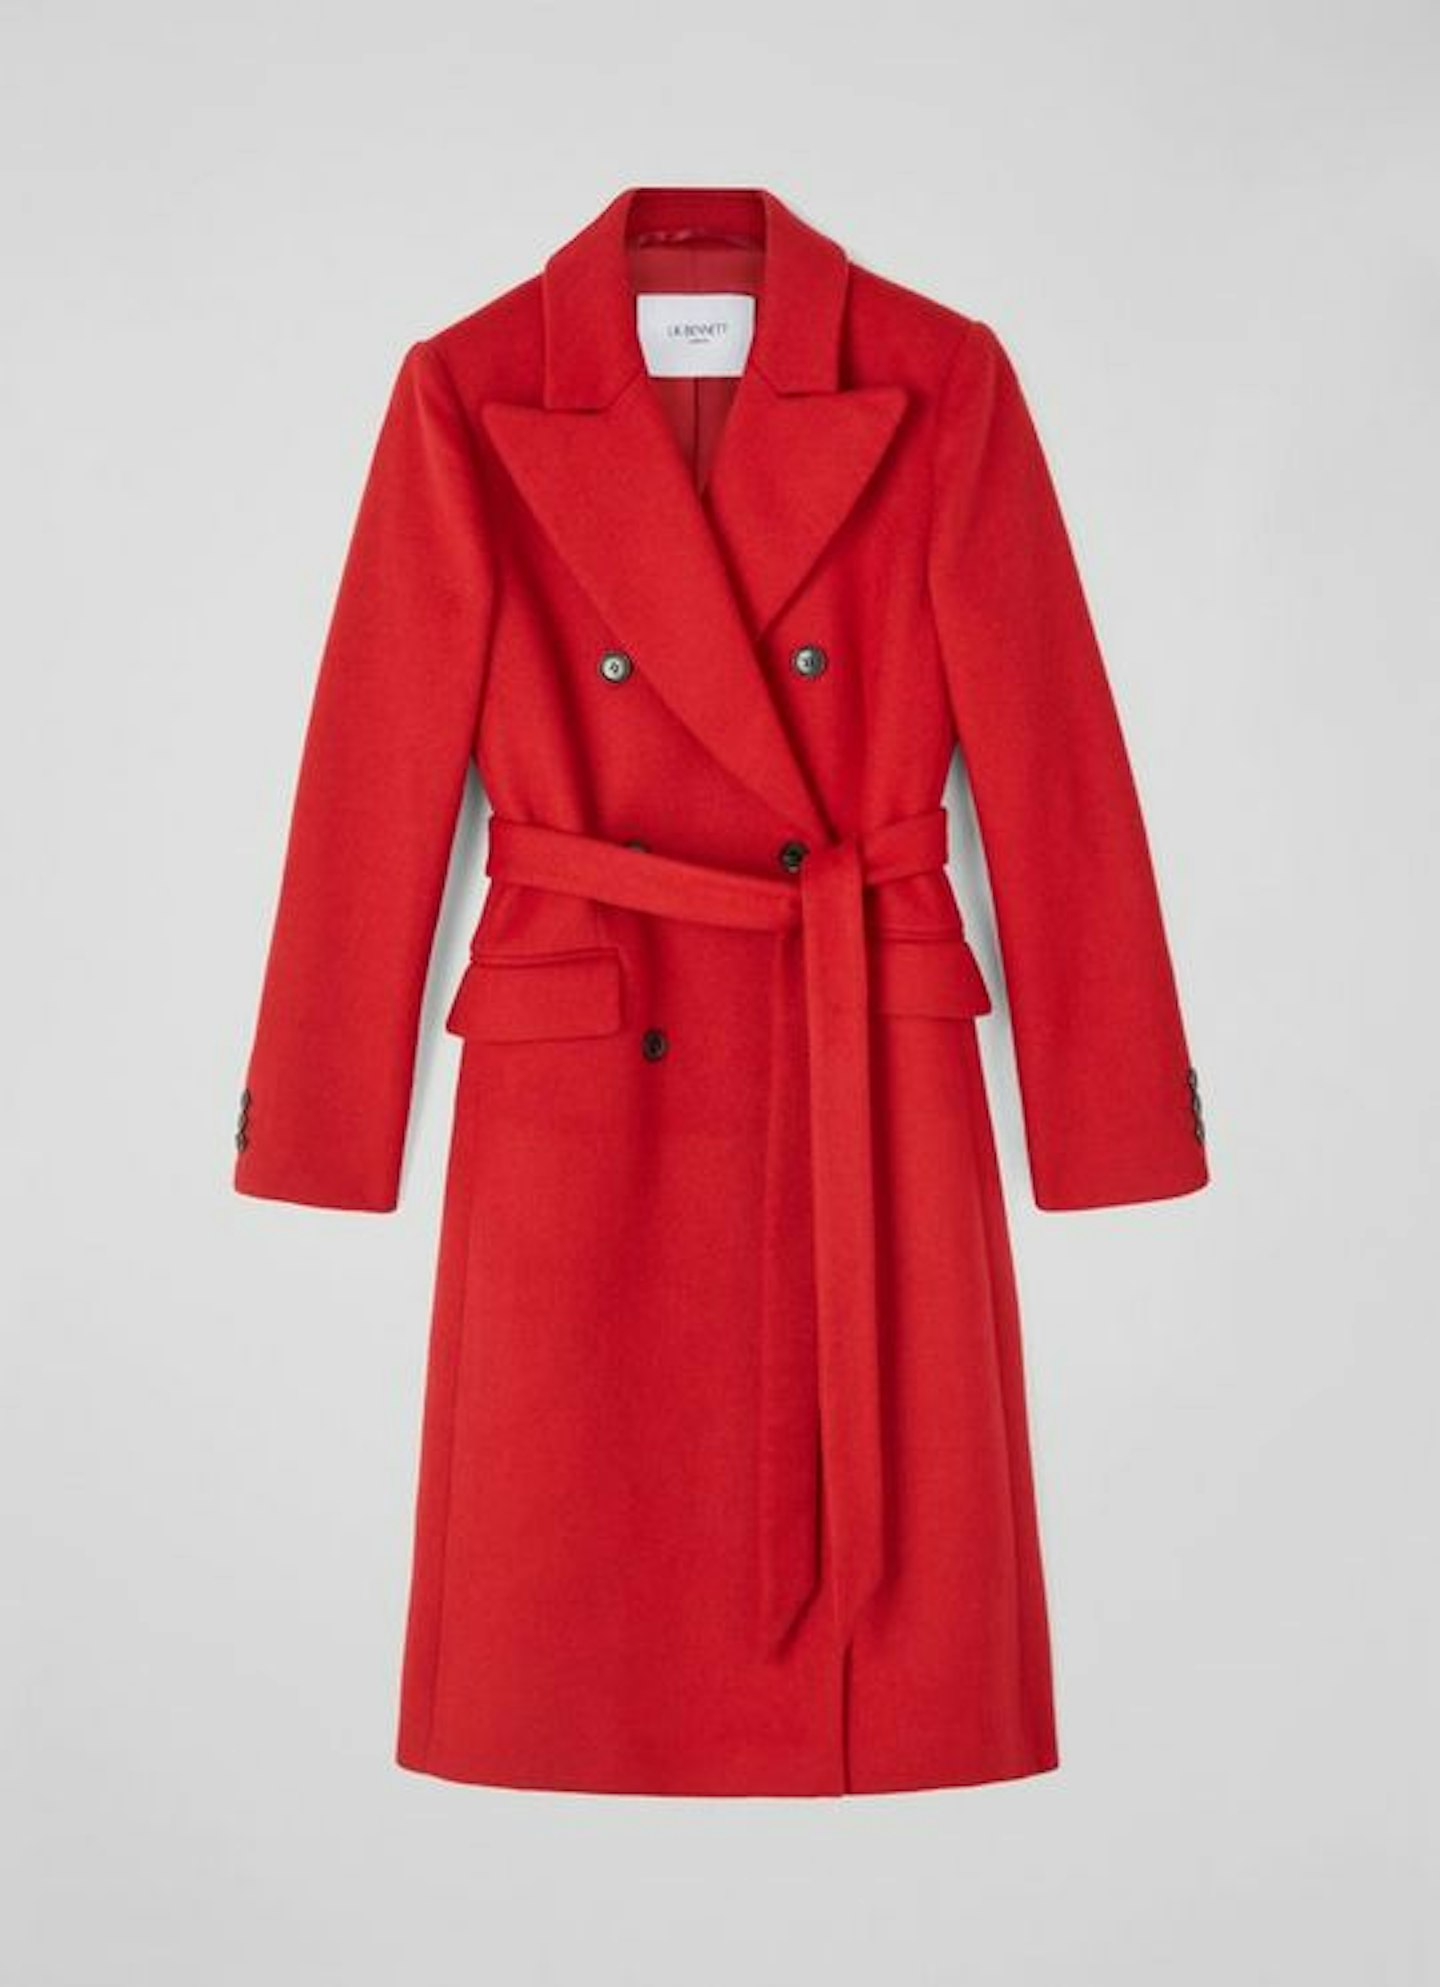 Lk Bennett, Tori Red Wool Double-Breasted Coat, £429